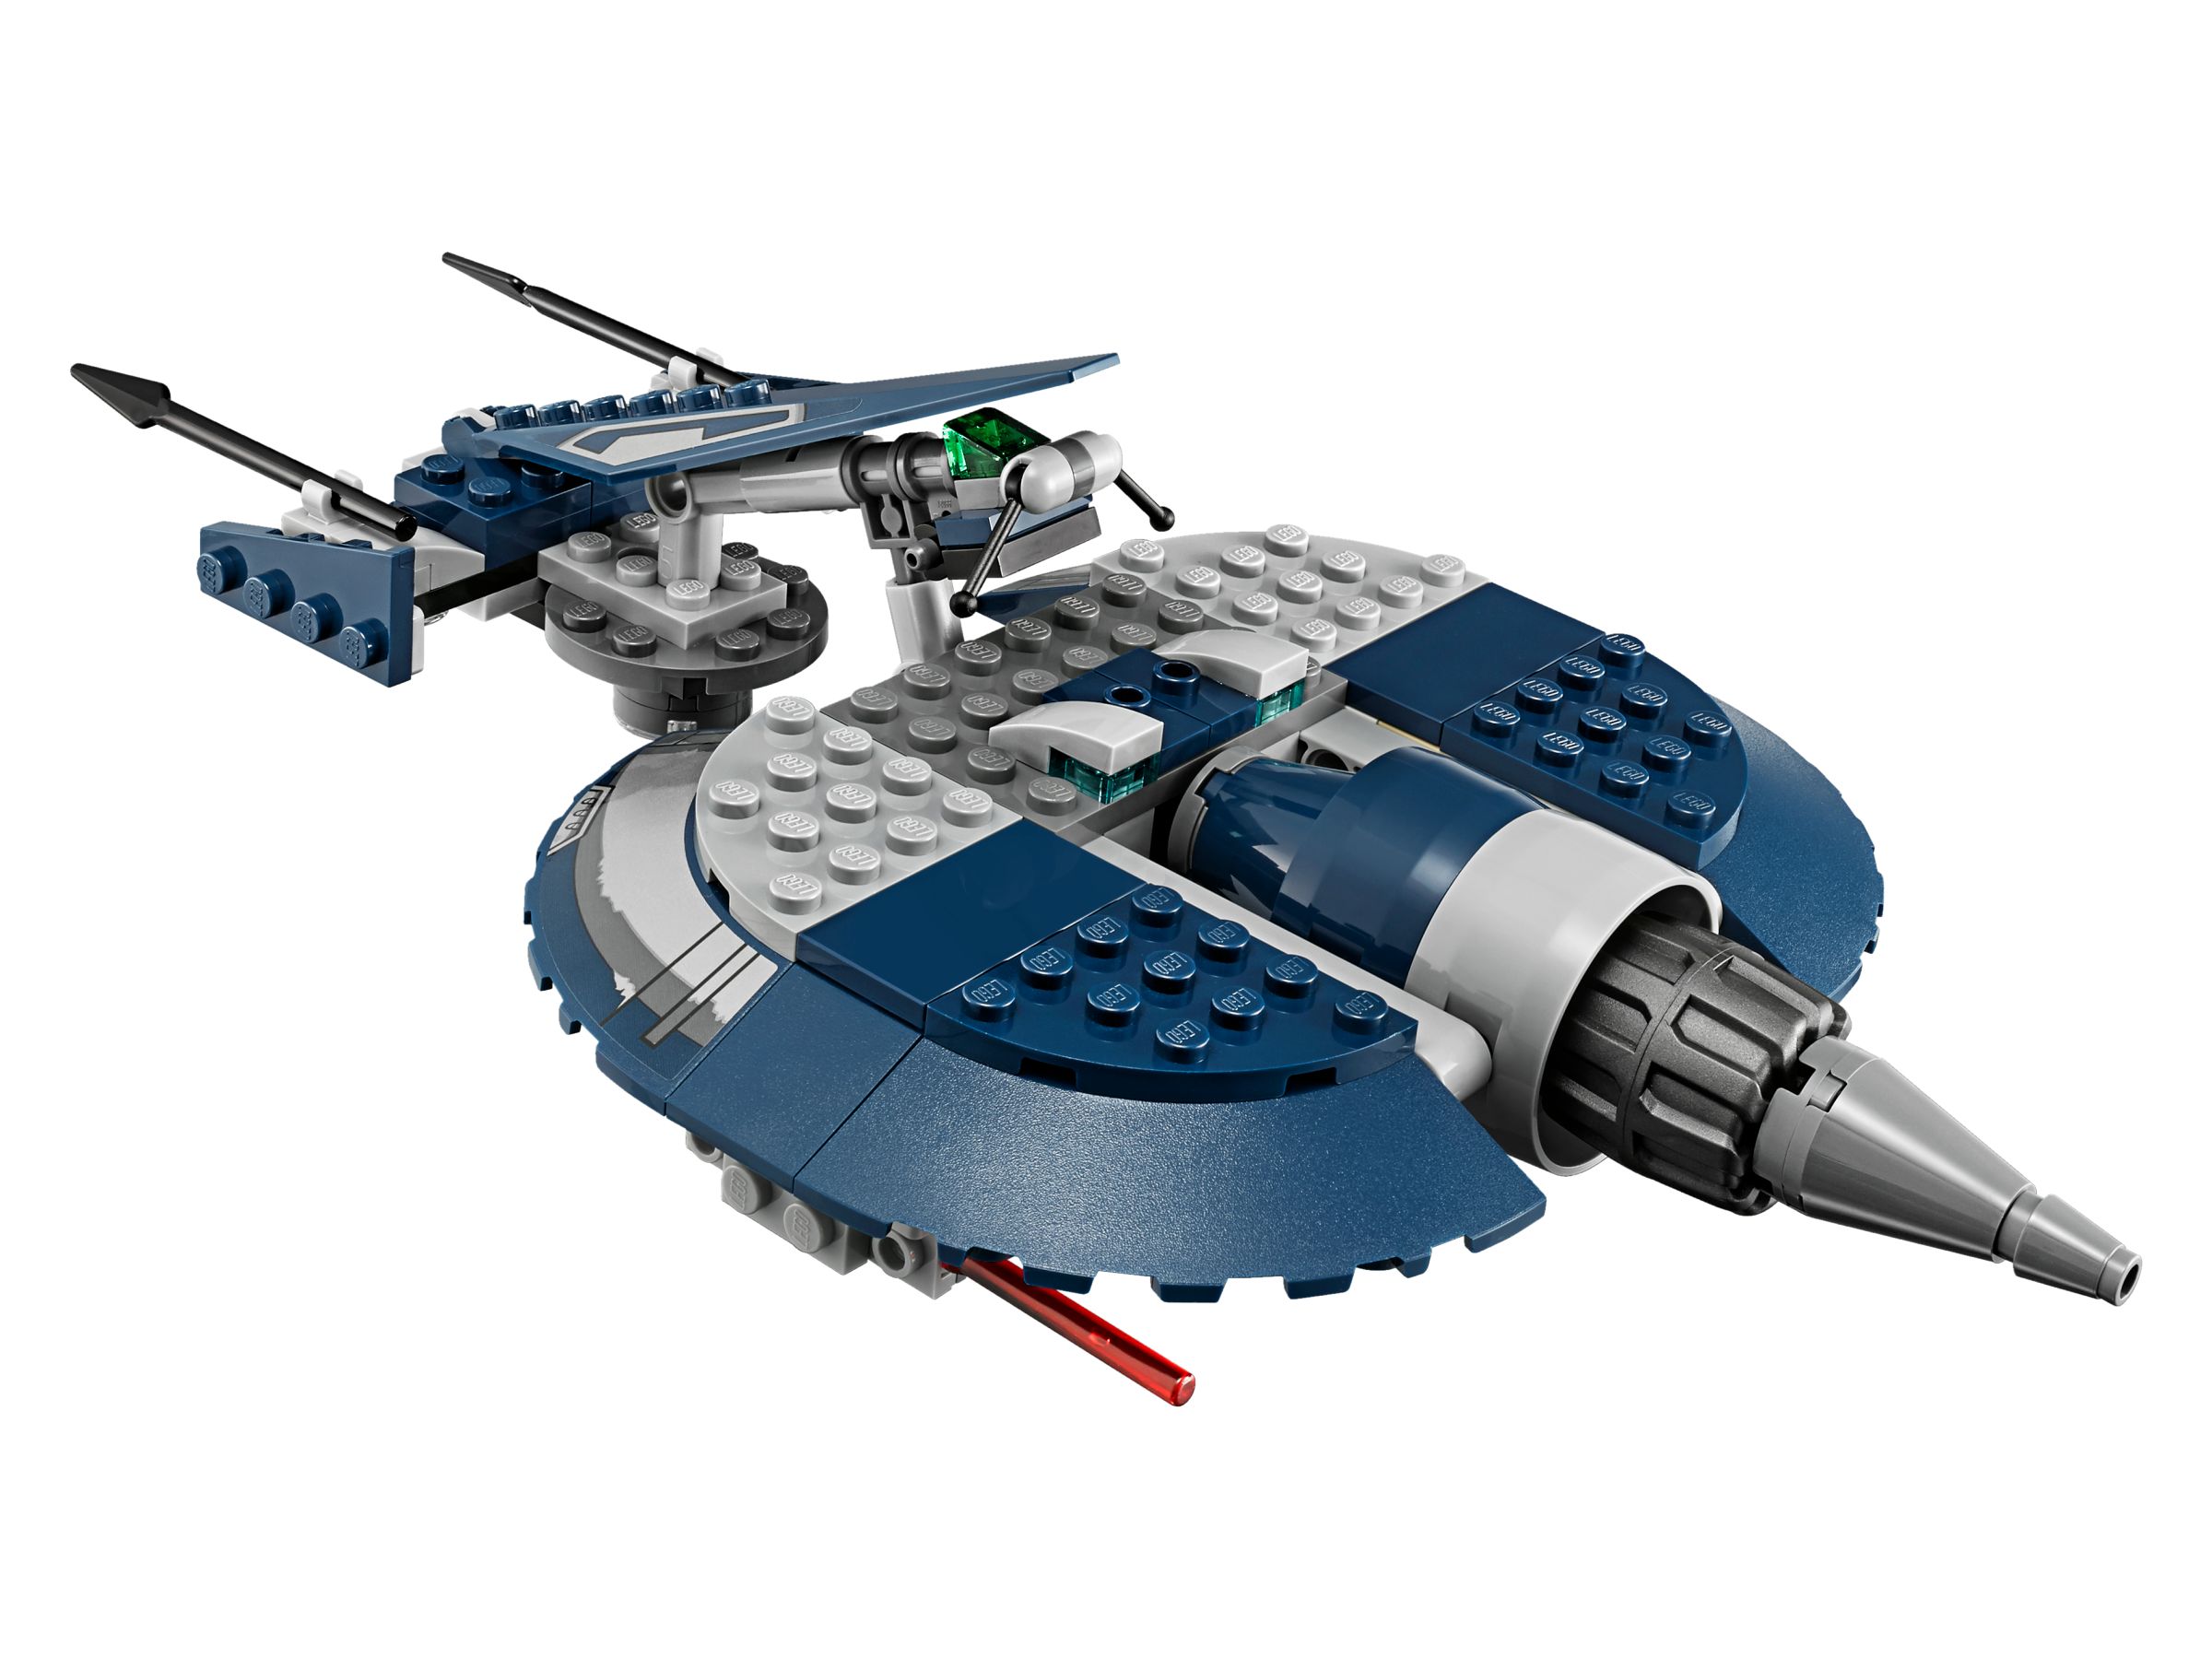 LEGO Star Wars 75199 General Grievous Combat Speeder LEGO_75199_alt4.jpg